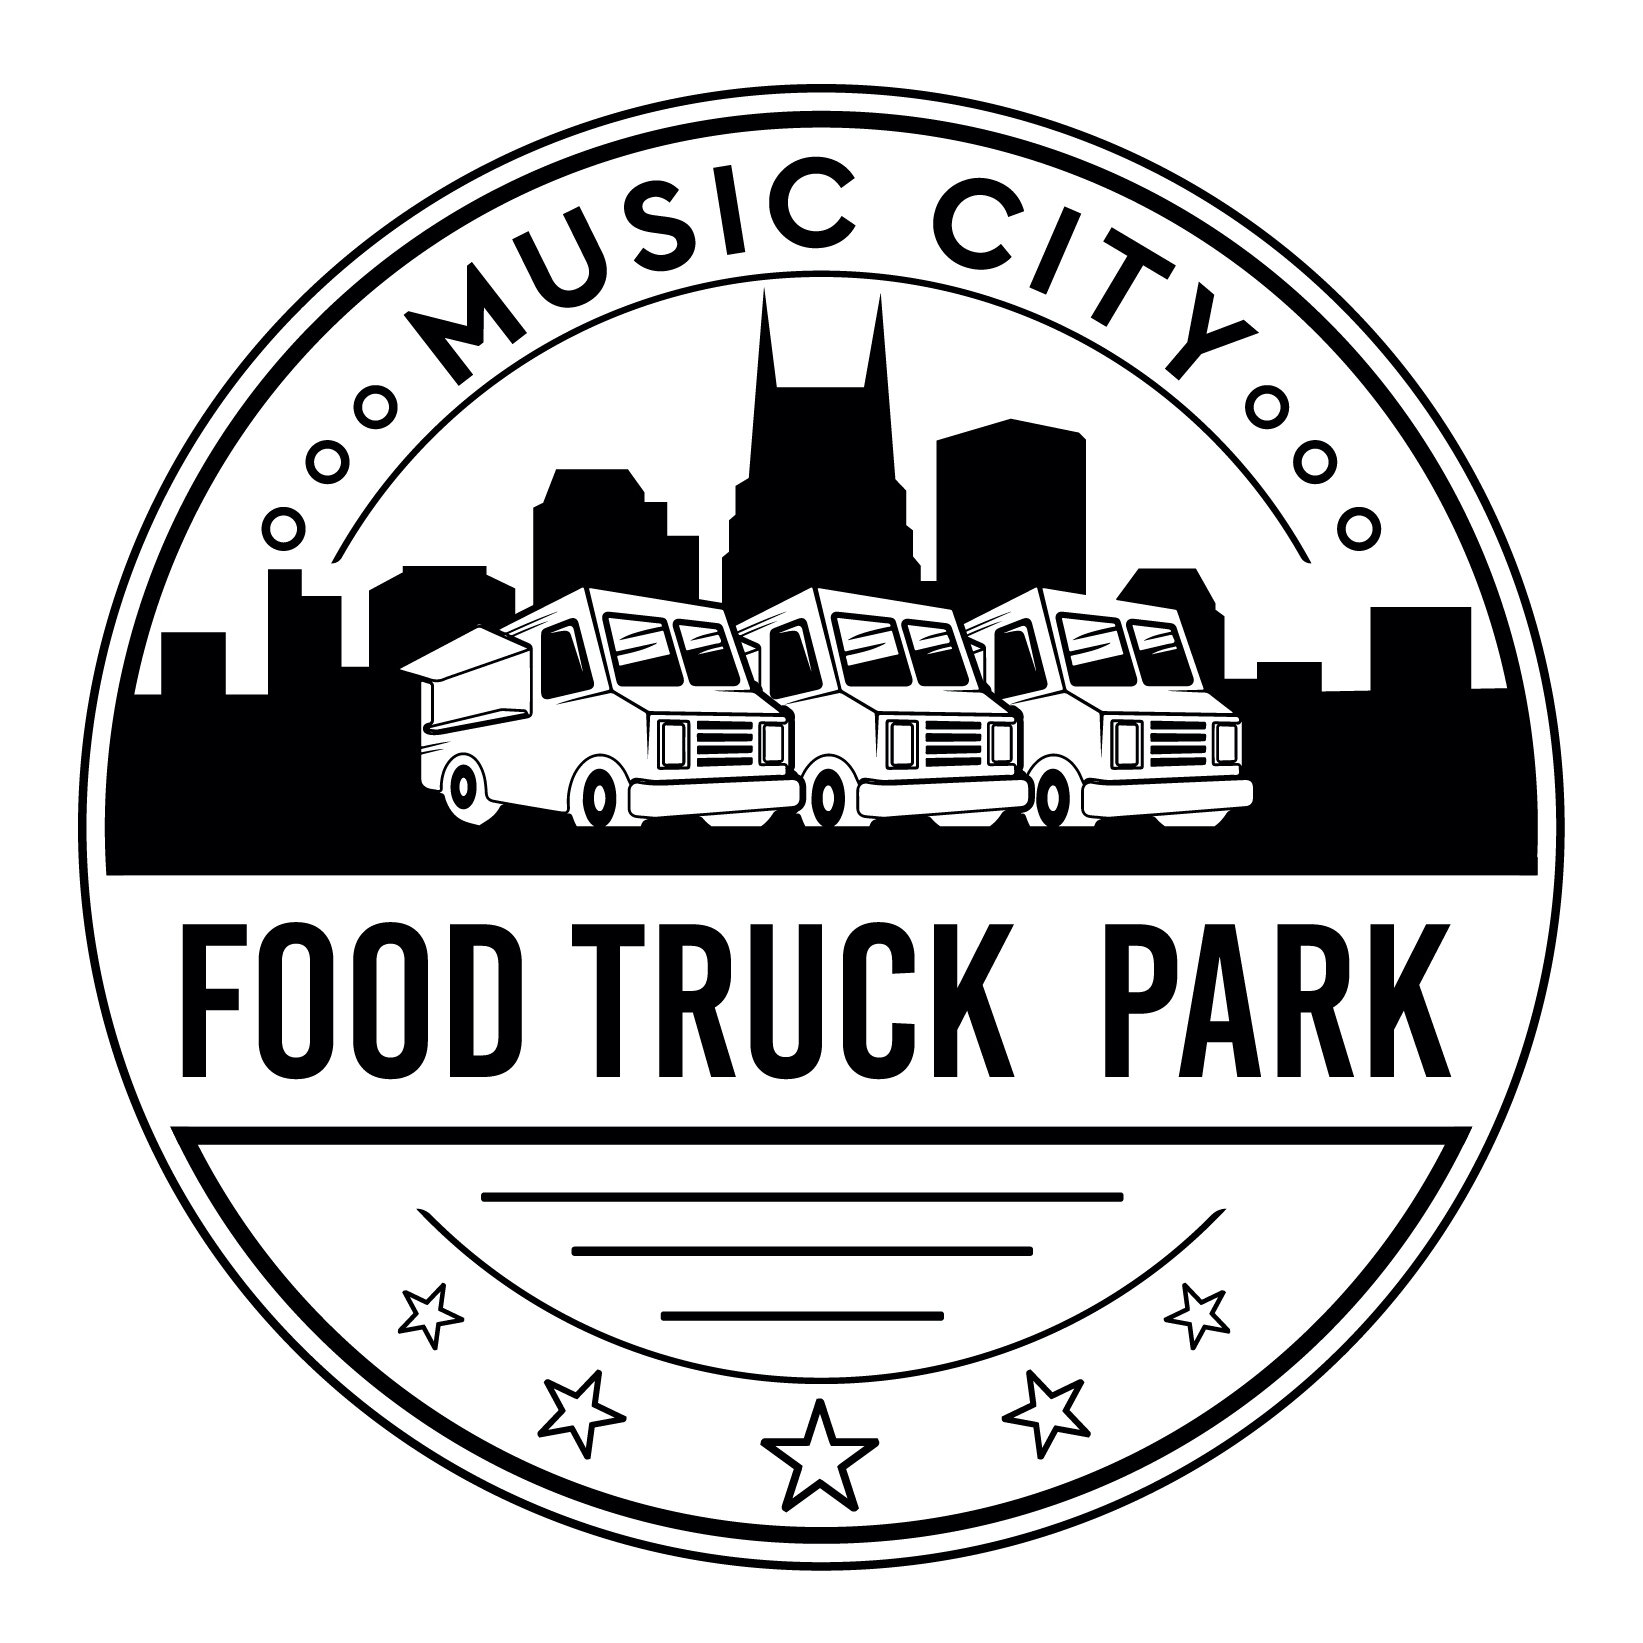 15981_Music City Food Truck Park_logo_KJ_PB-01-01.jpg